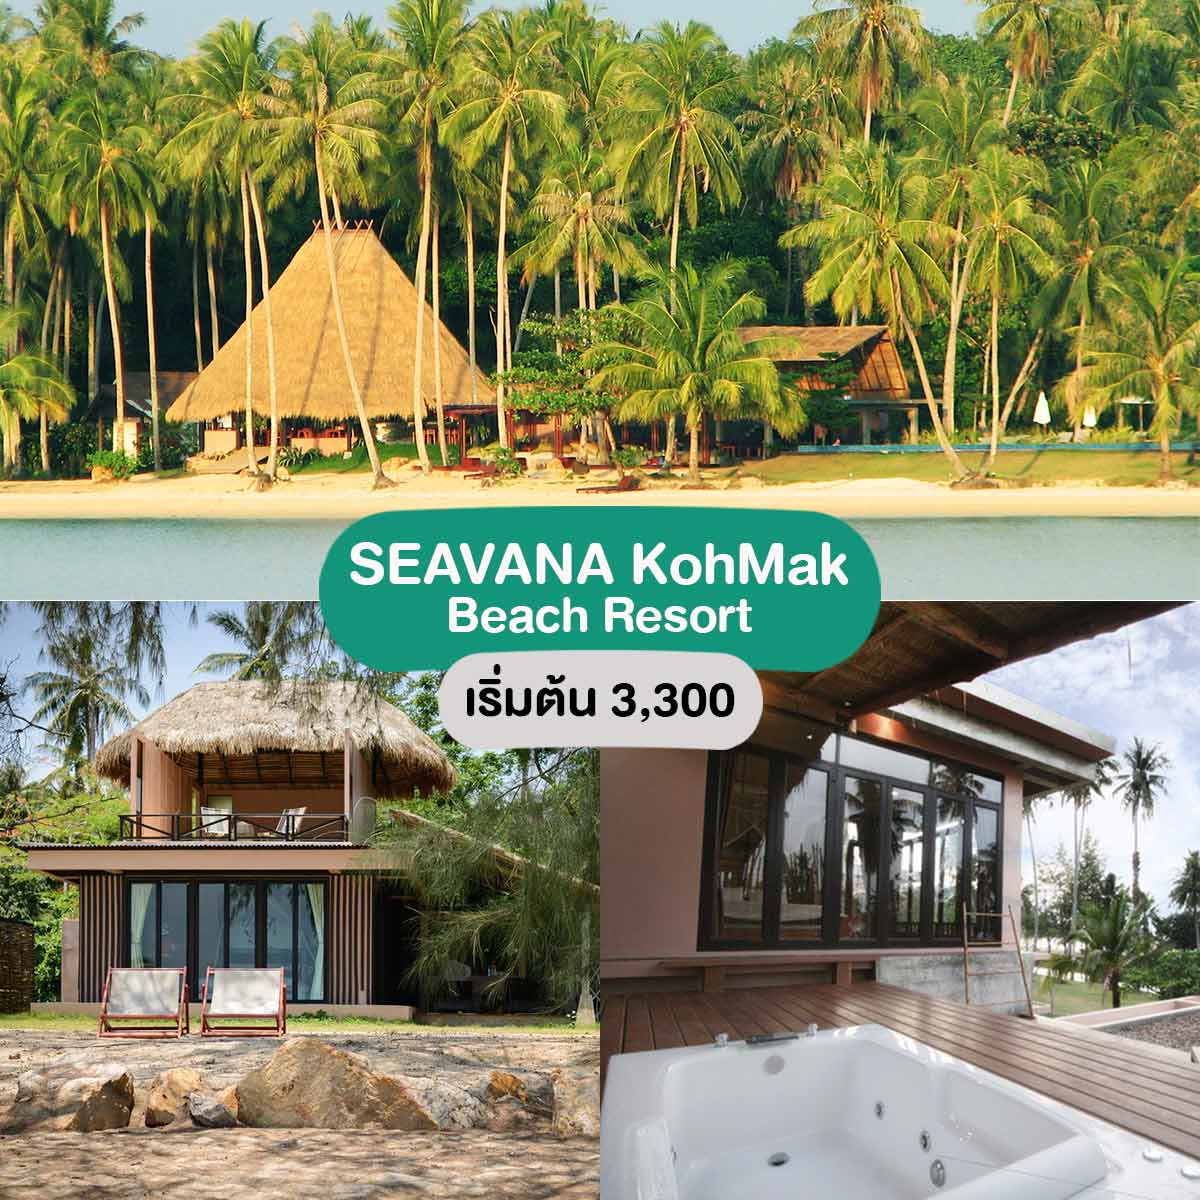 SEAVANA KohMak Beach Resort